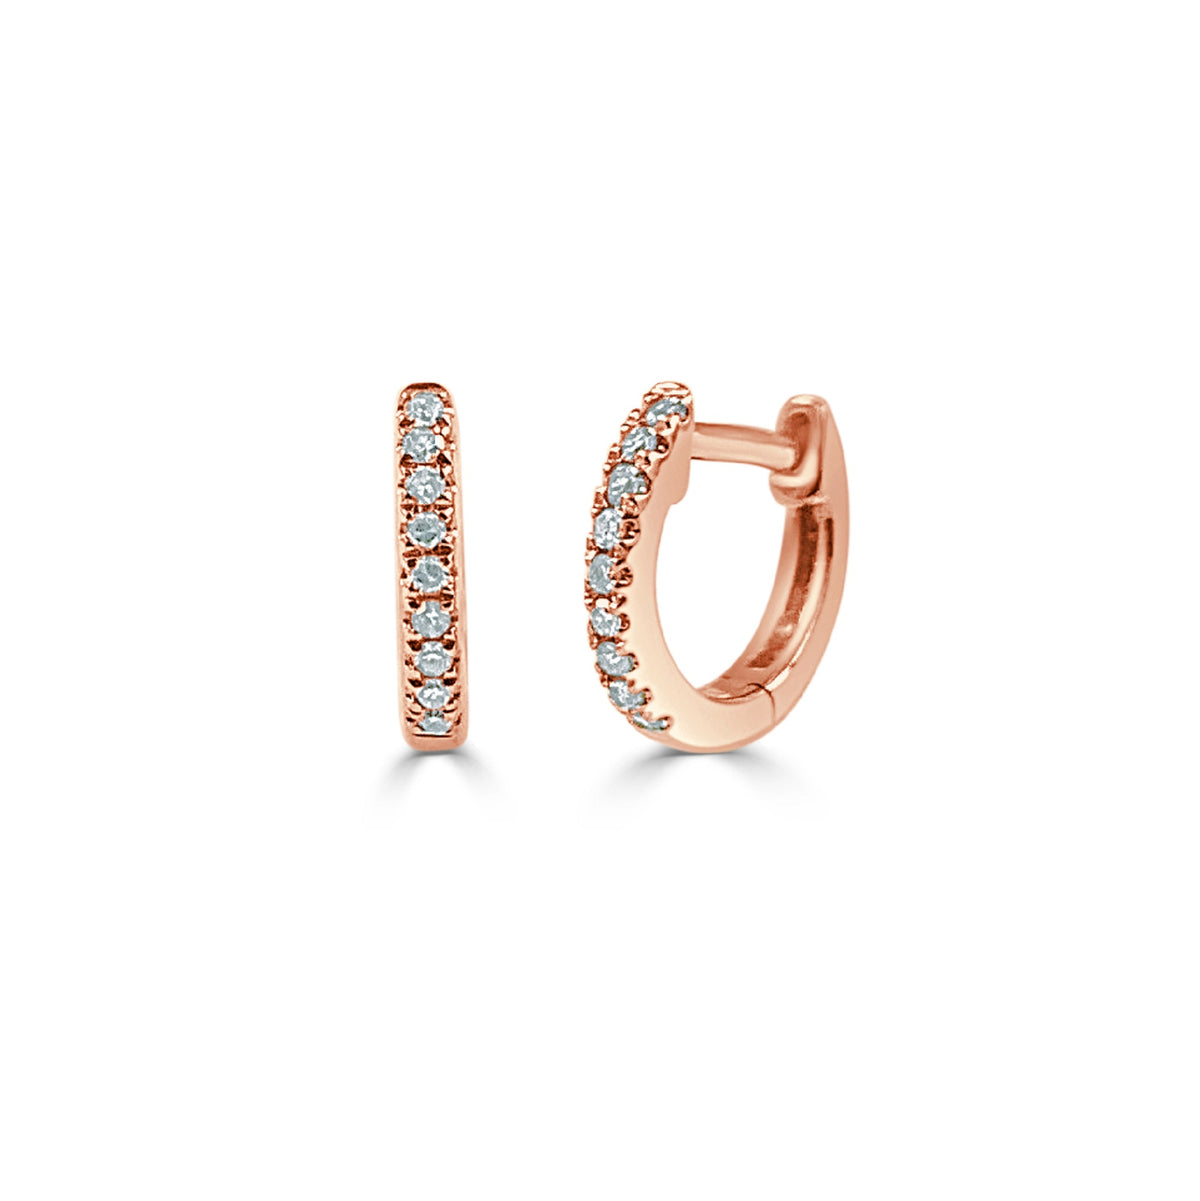 Diamond Huggie Earrings in 14K Rose Gold 0.05 Ctw